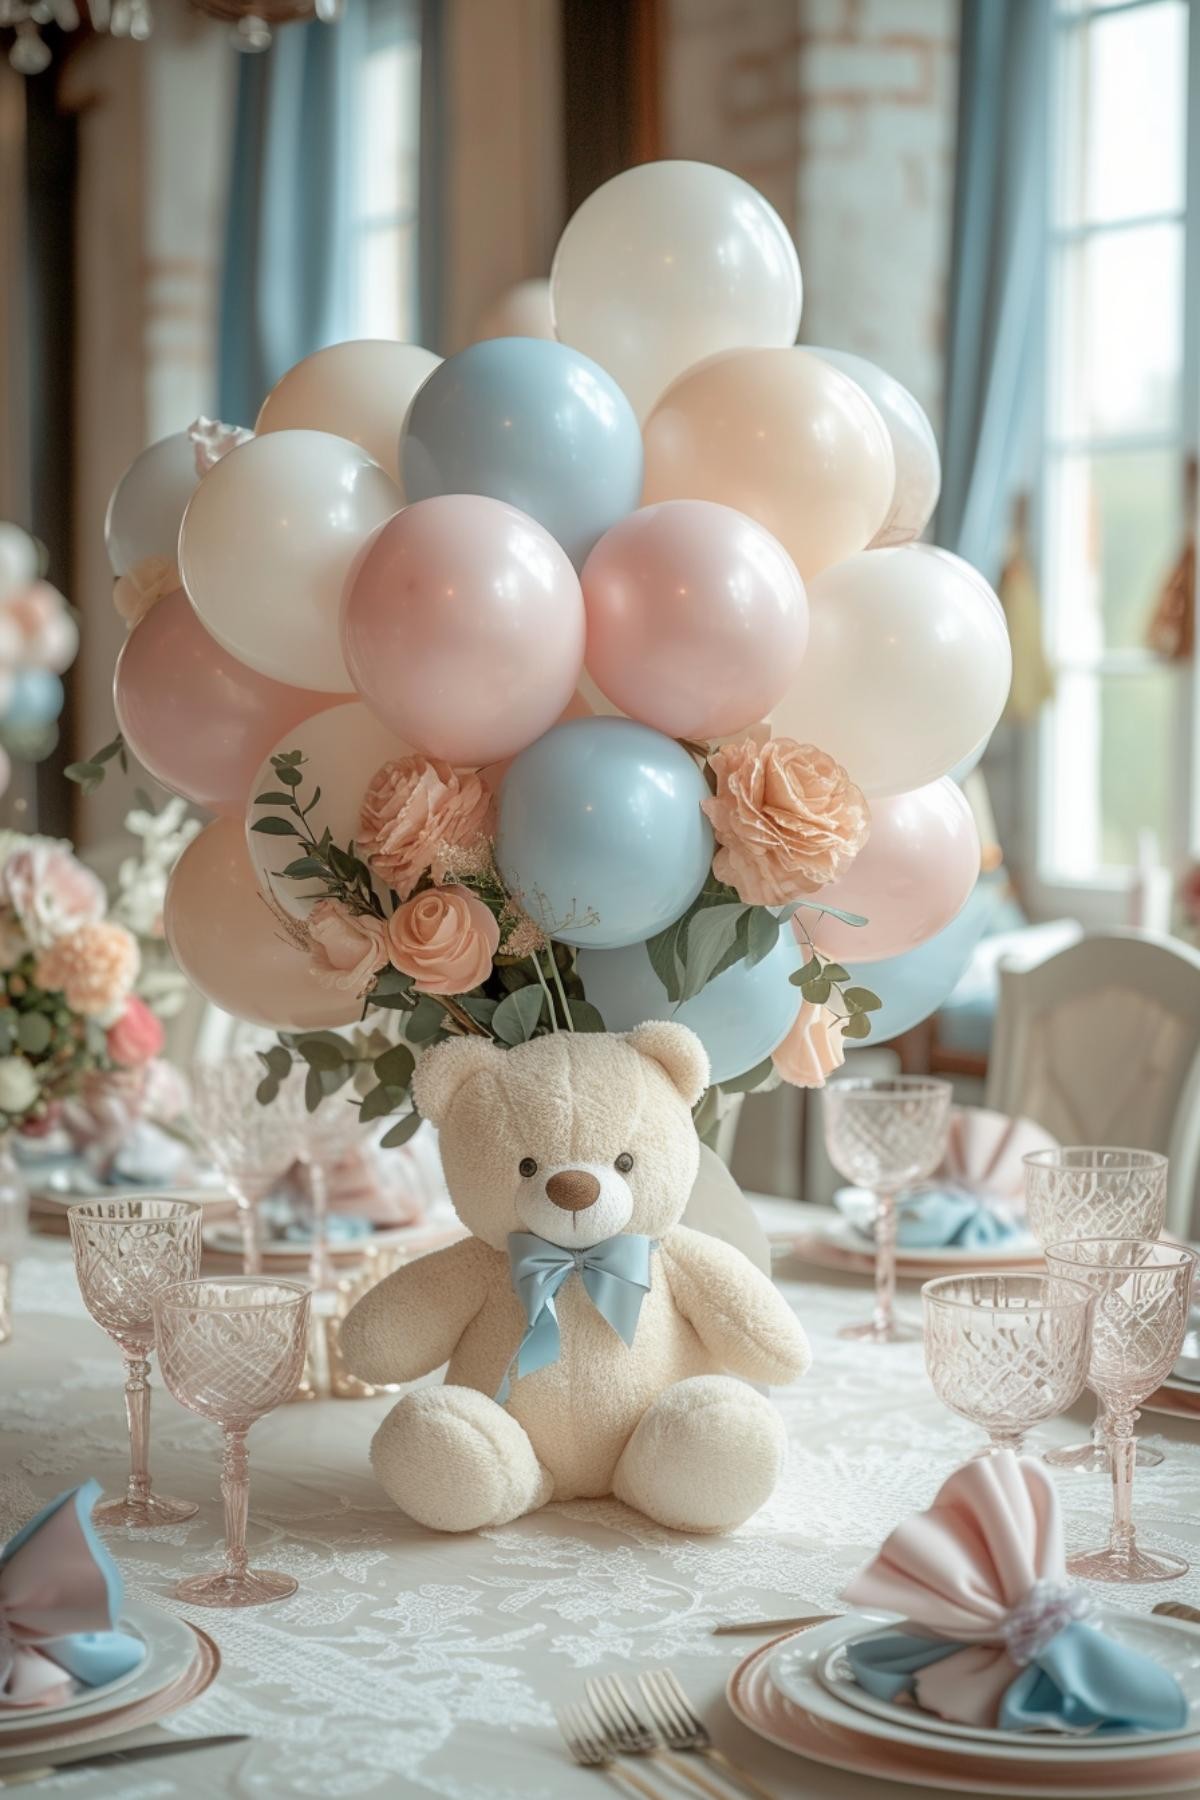 Teddy’s Balloon Party